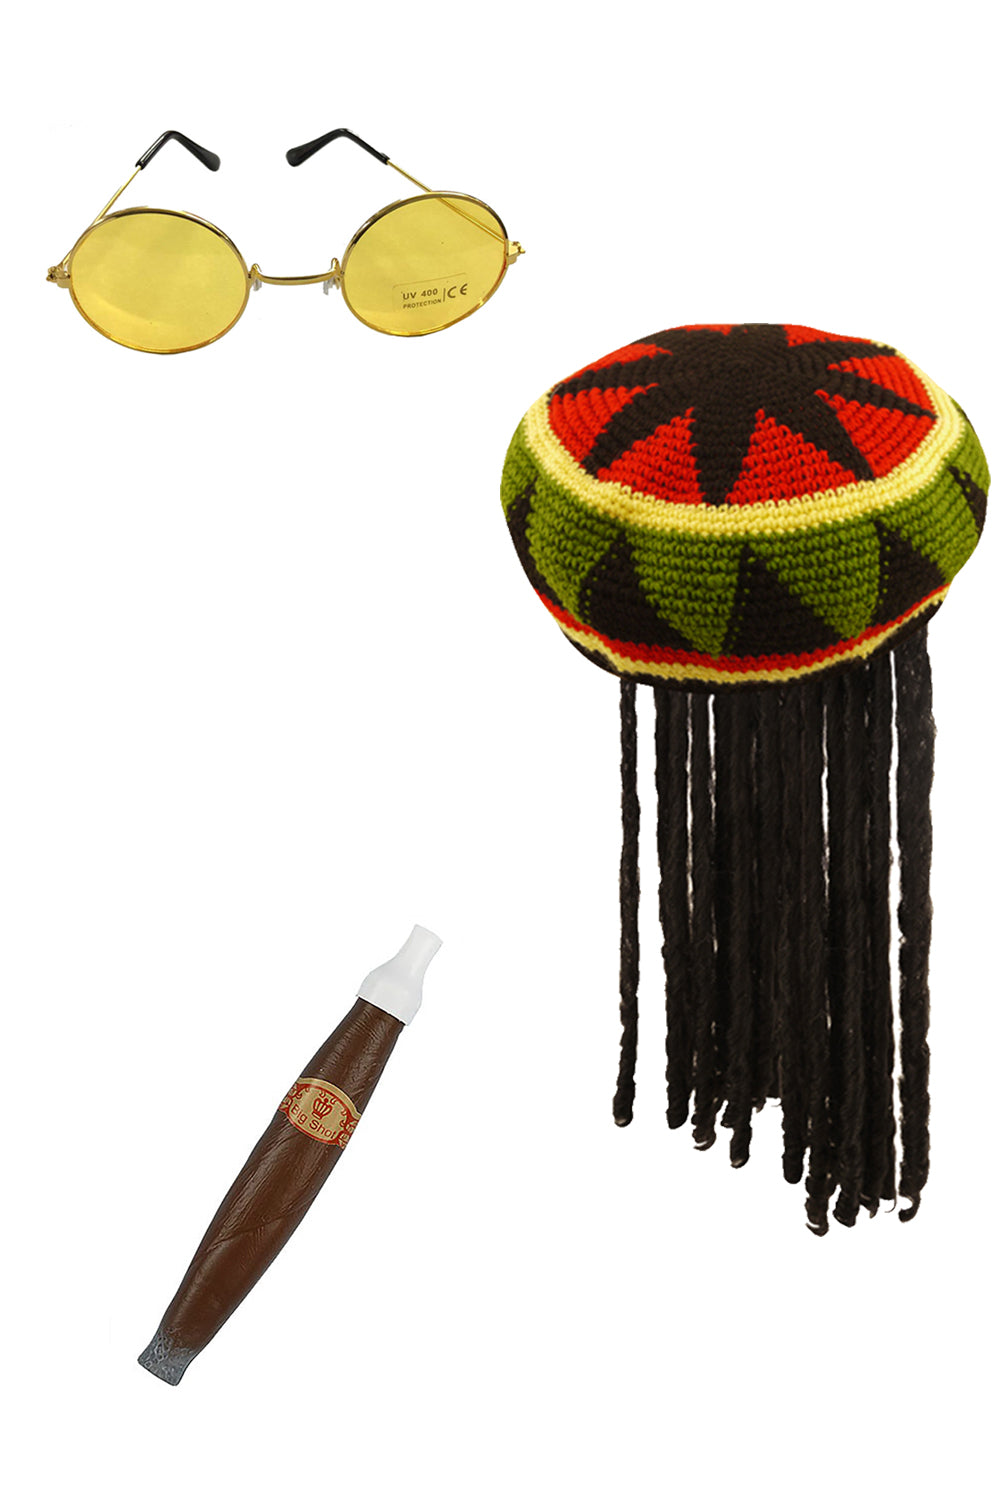 Bob Marley Rasta Beach Costume Set